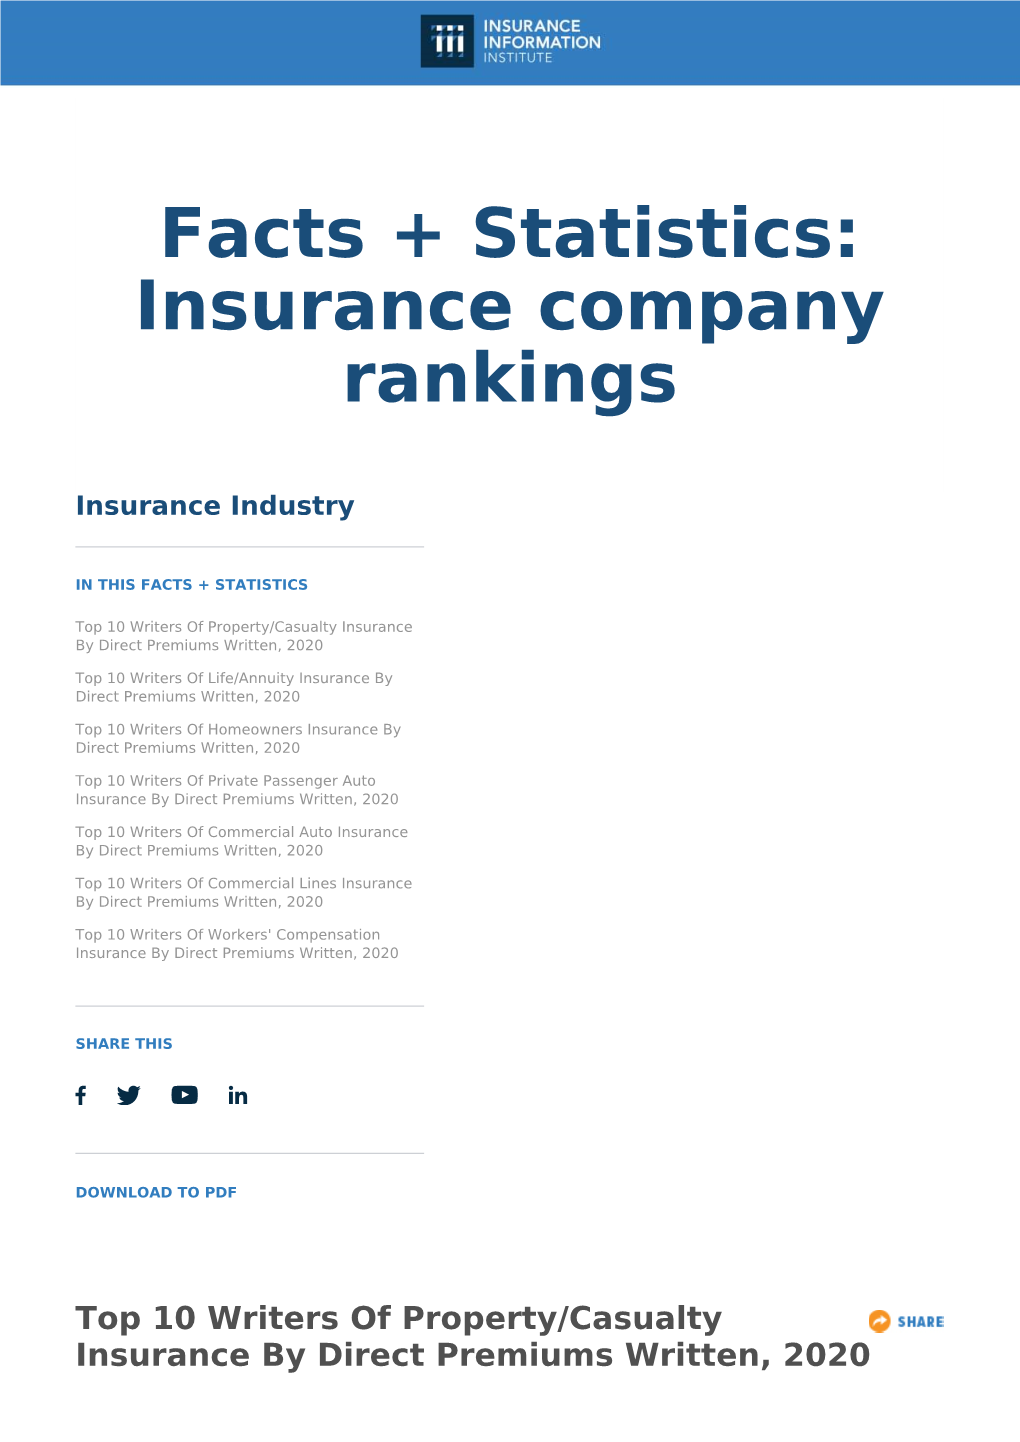 Facts + Statistics: Insurance Company Rankings